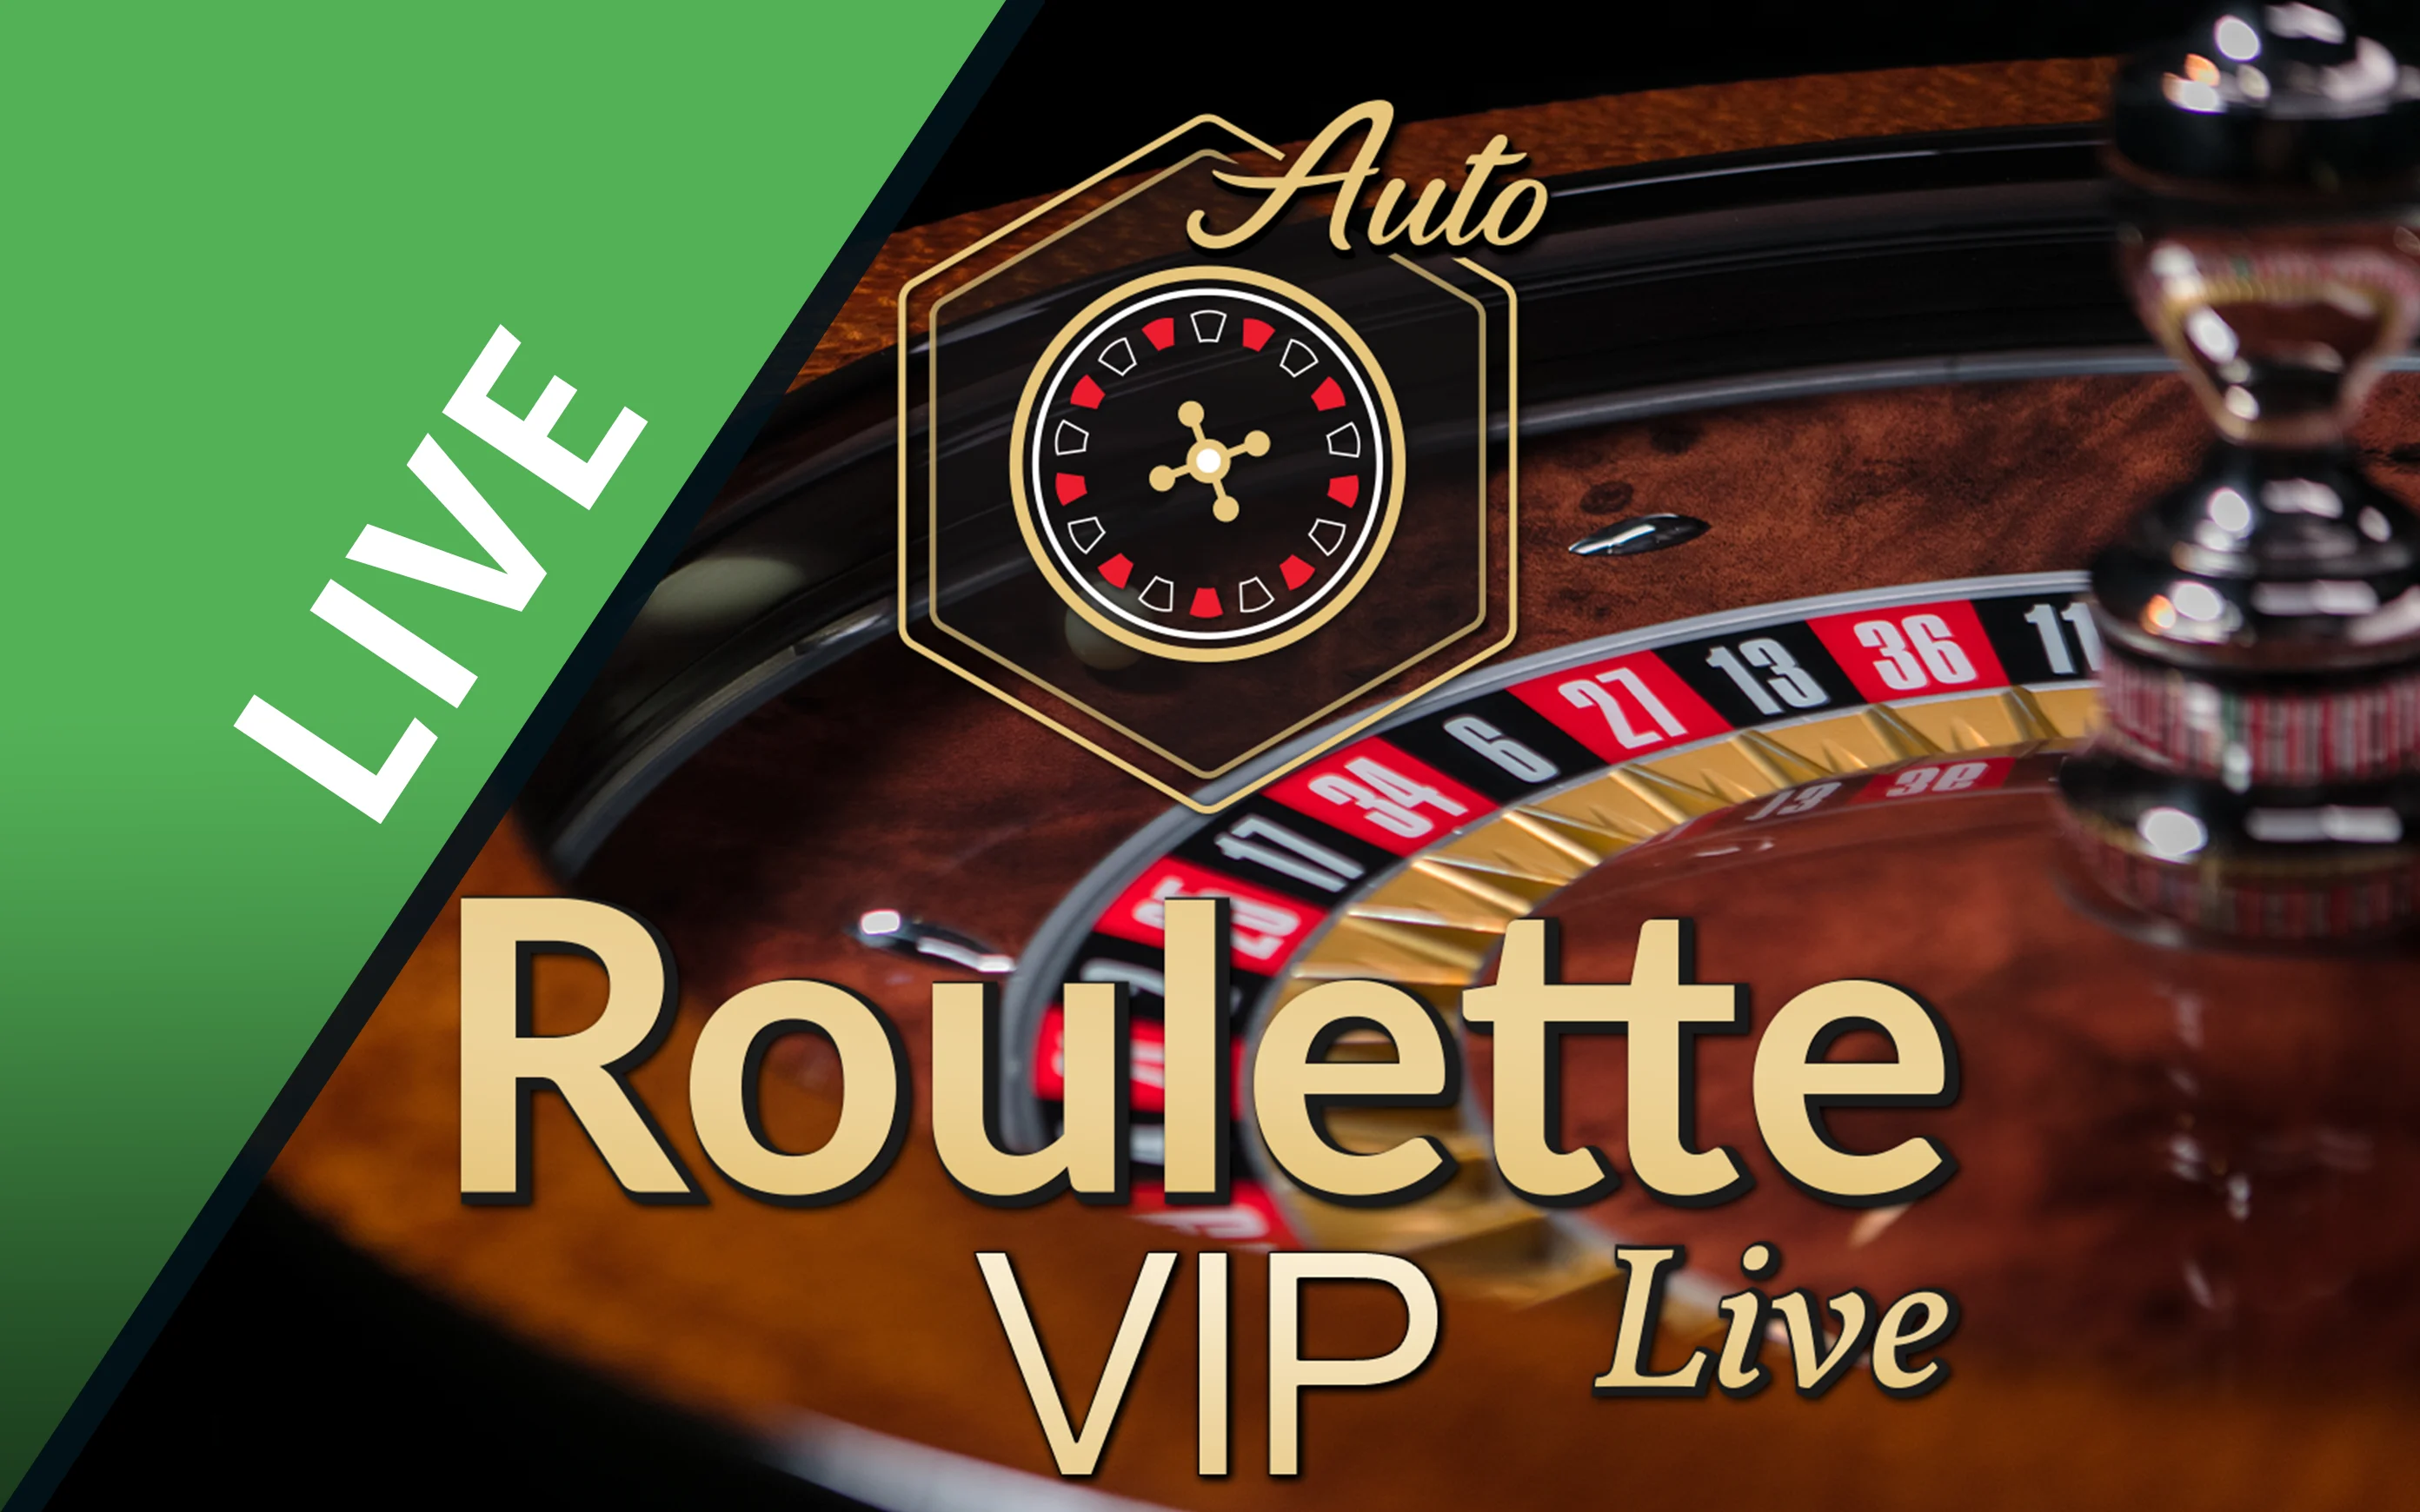 Juega a Auto Roulette VIP en el casino en línea de Starcasino.be